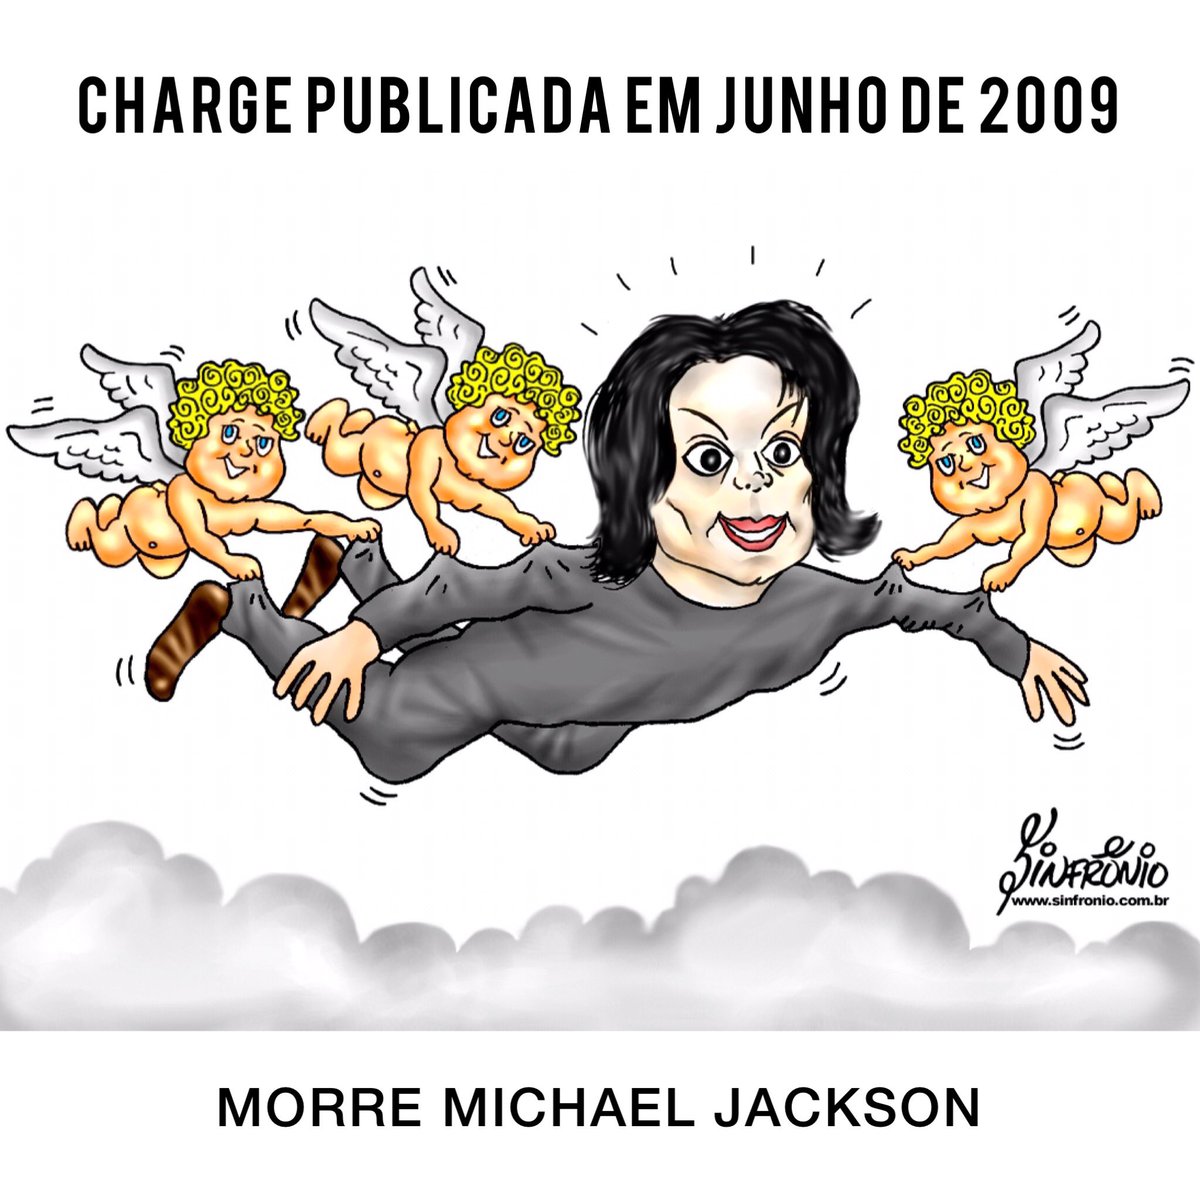 RETROSPECTIVA #michaeljackson #cantorpop #pop #peterpan #pedofilo #anjos #anjinhos #popstar #charge #humor #sinfronio